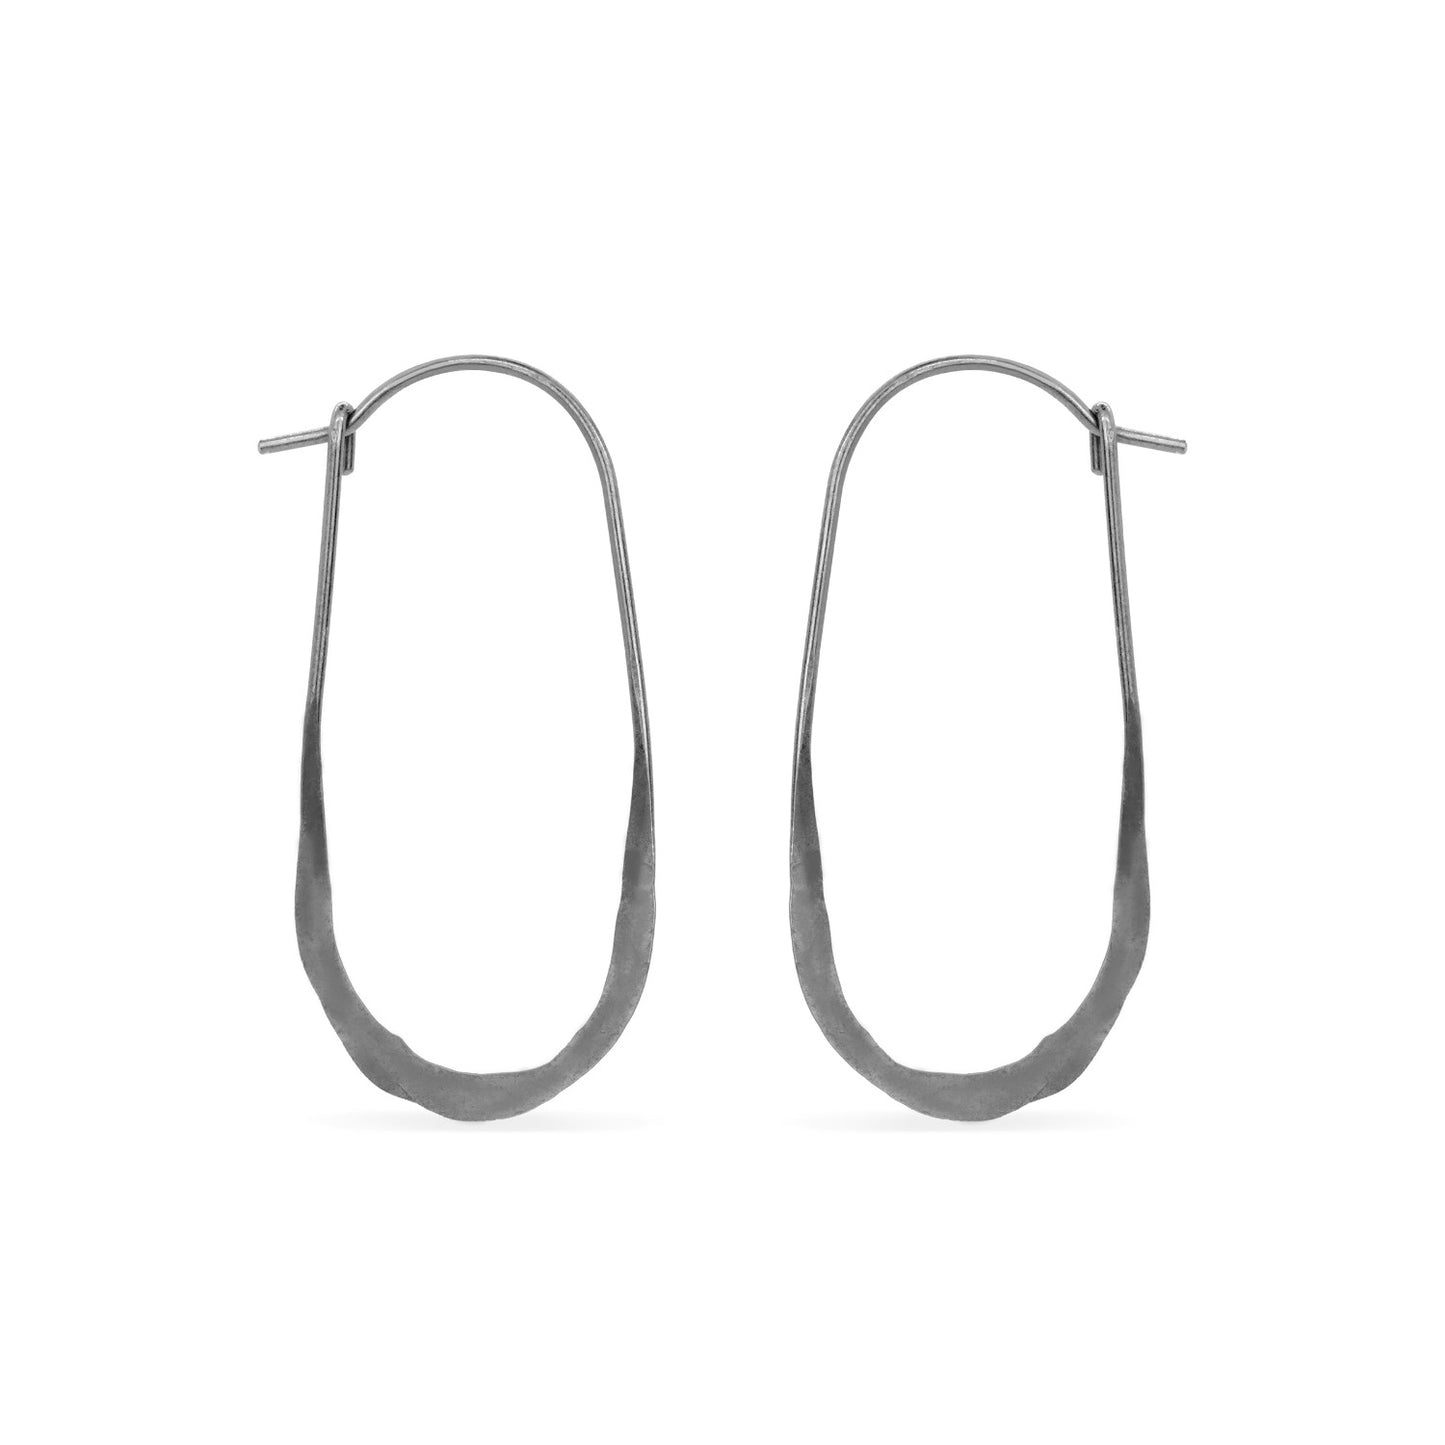 Black oval wire hoop earrings